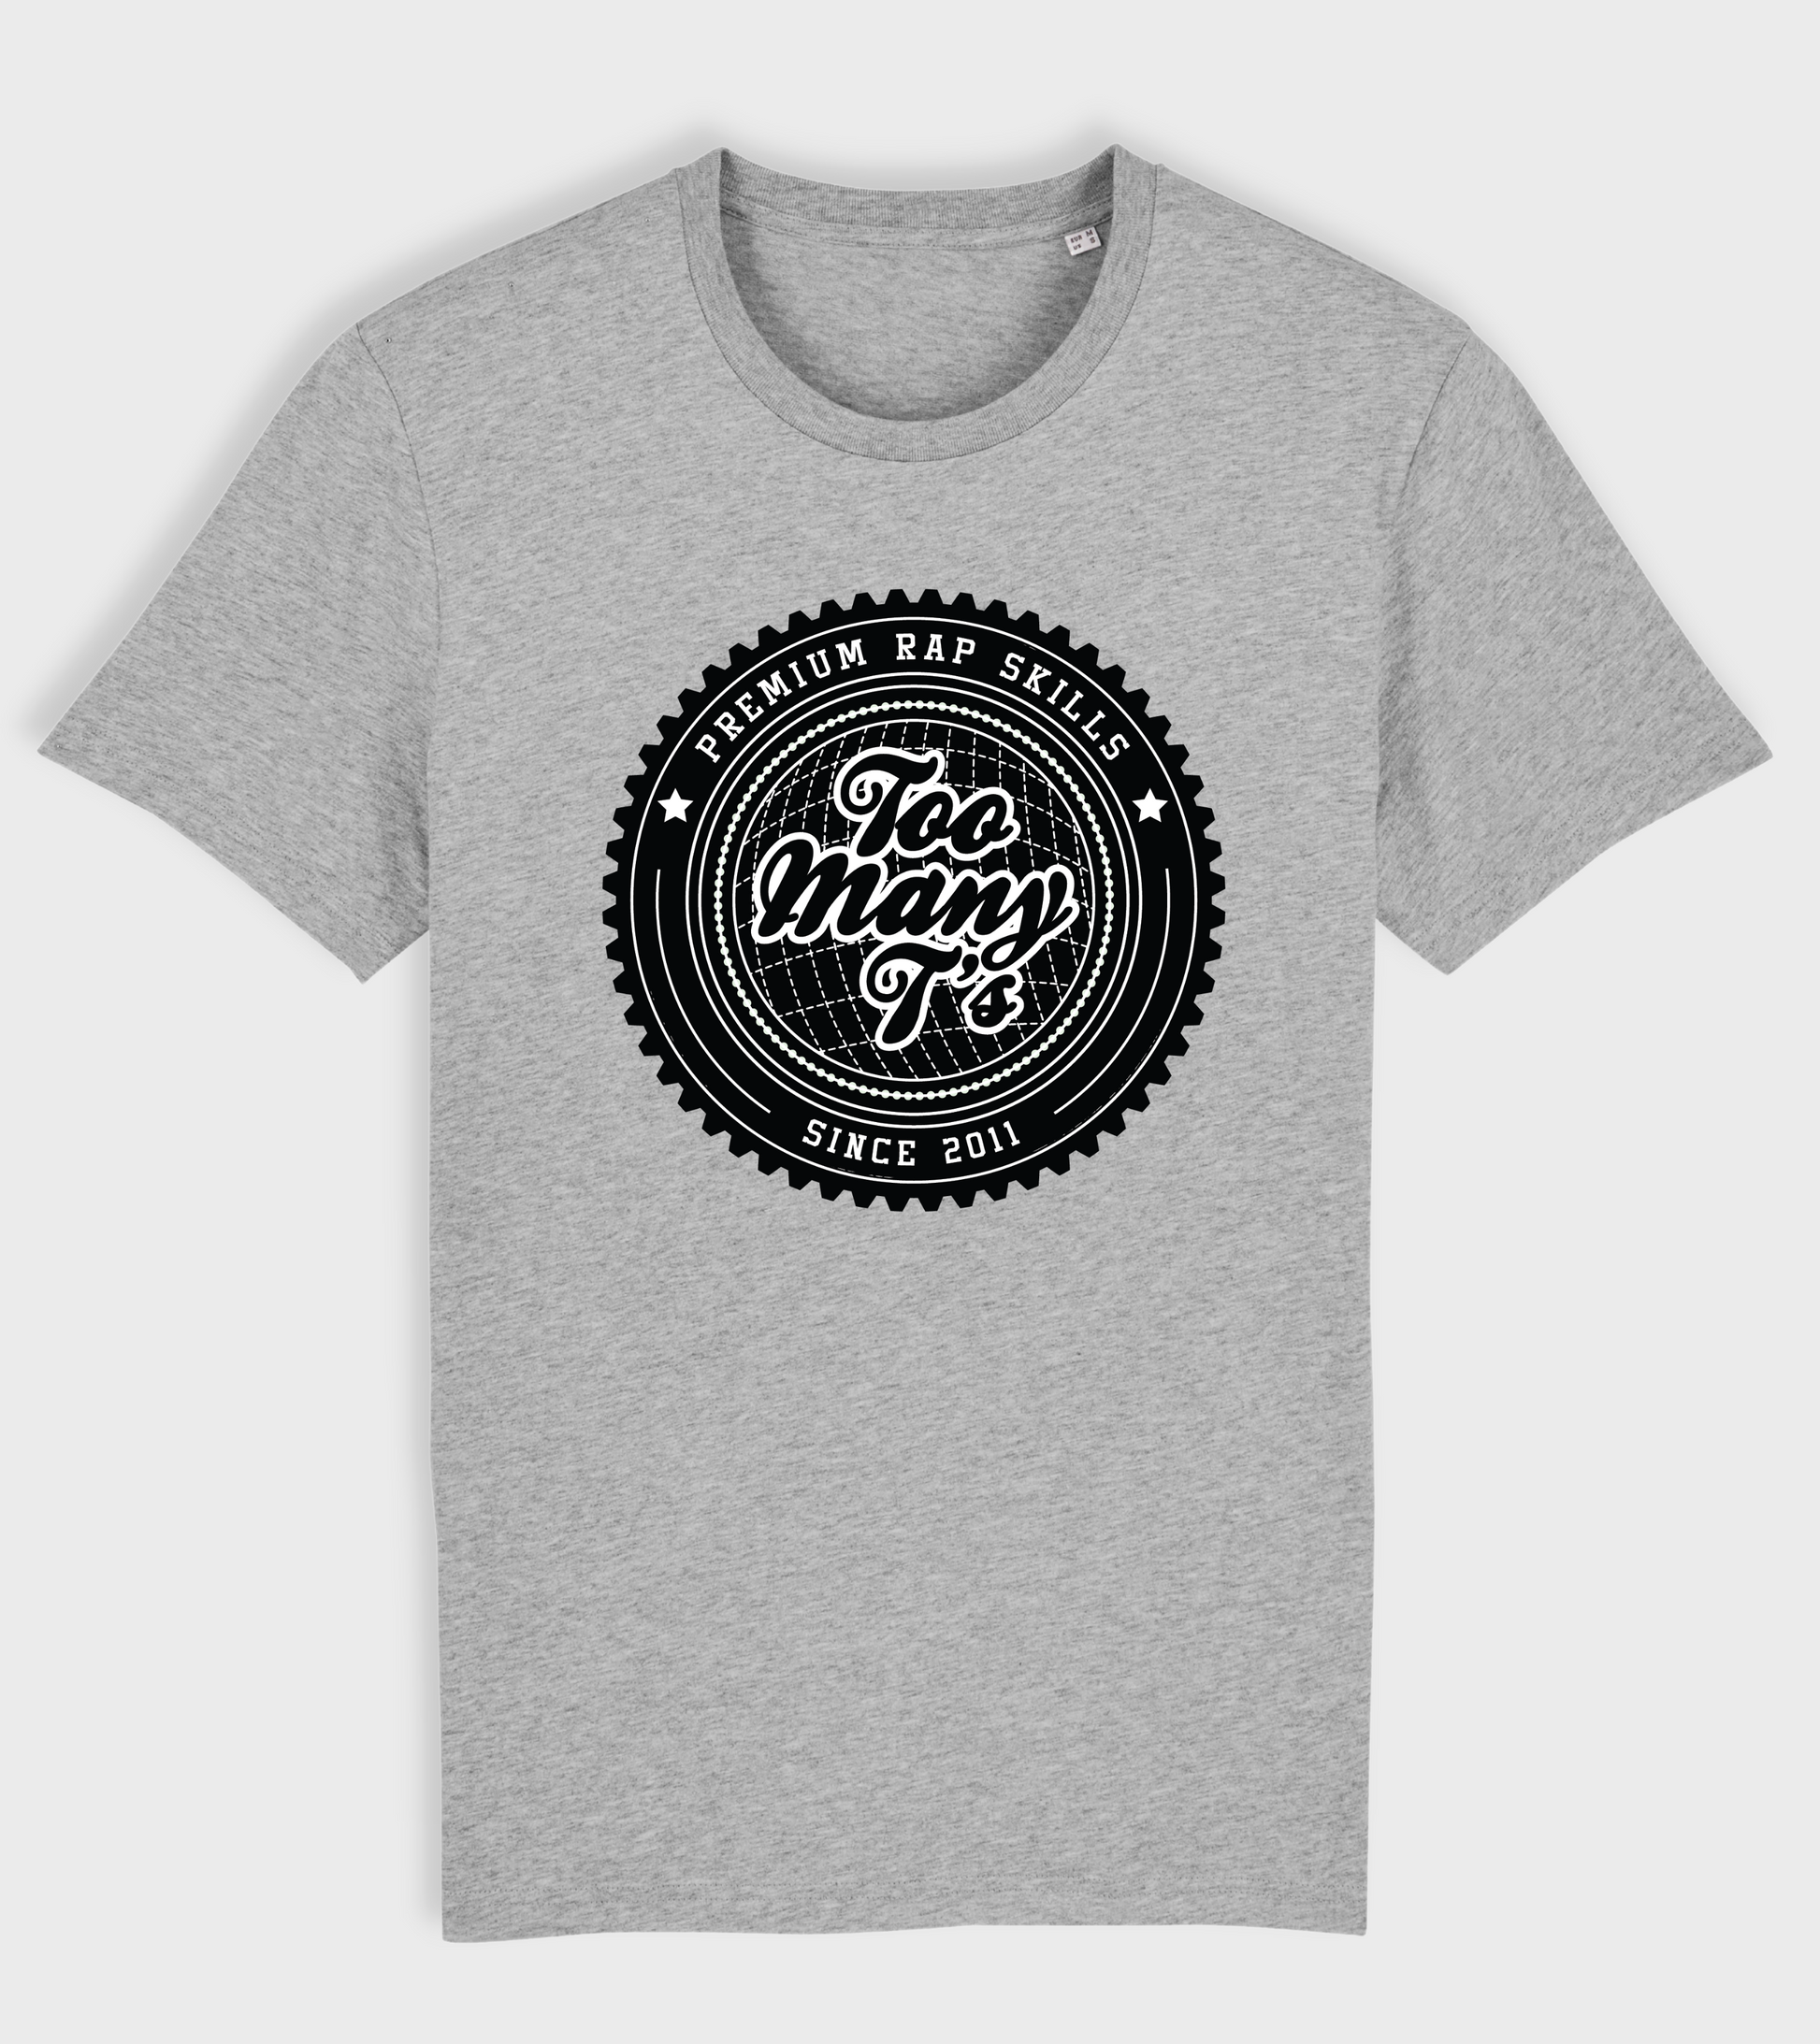 Grey regular fit t-shirt with black premium rap skills design.